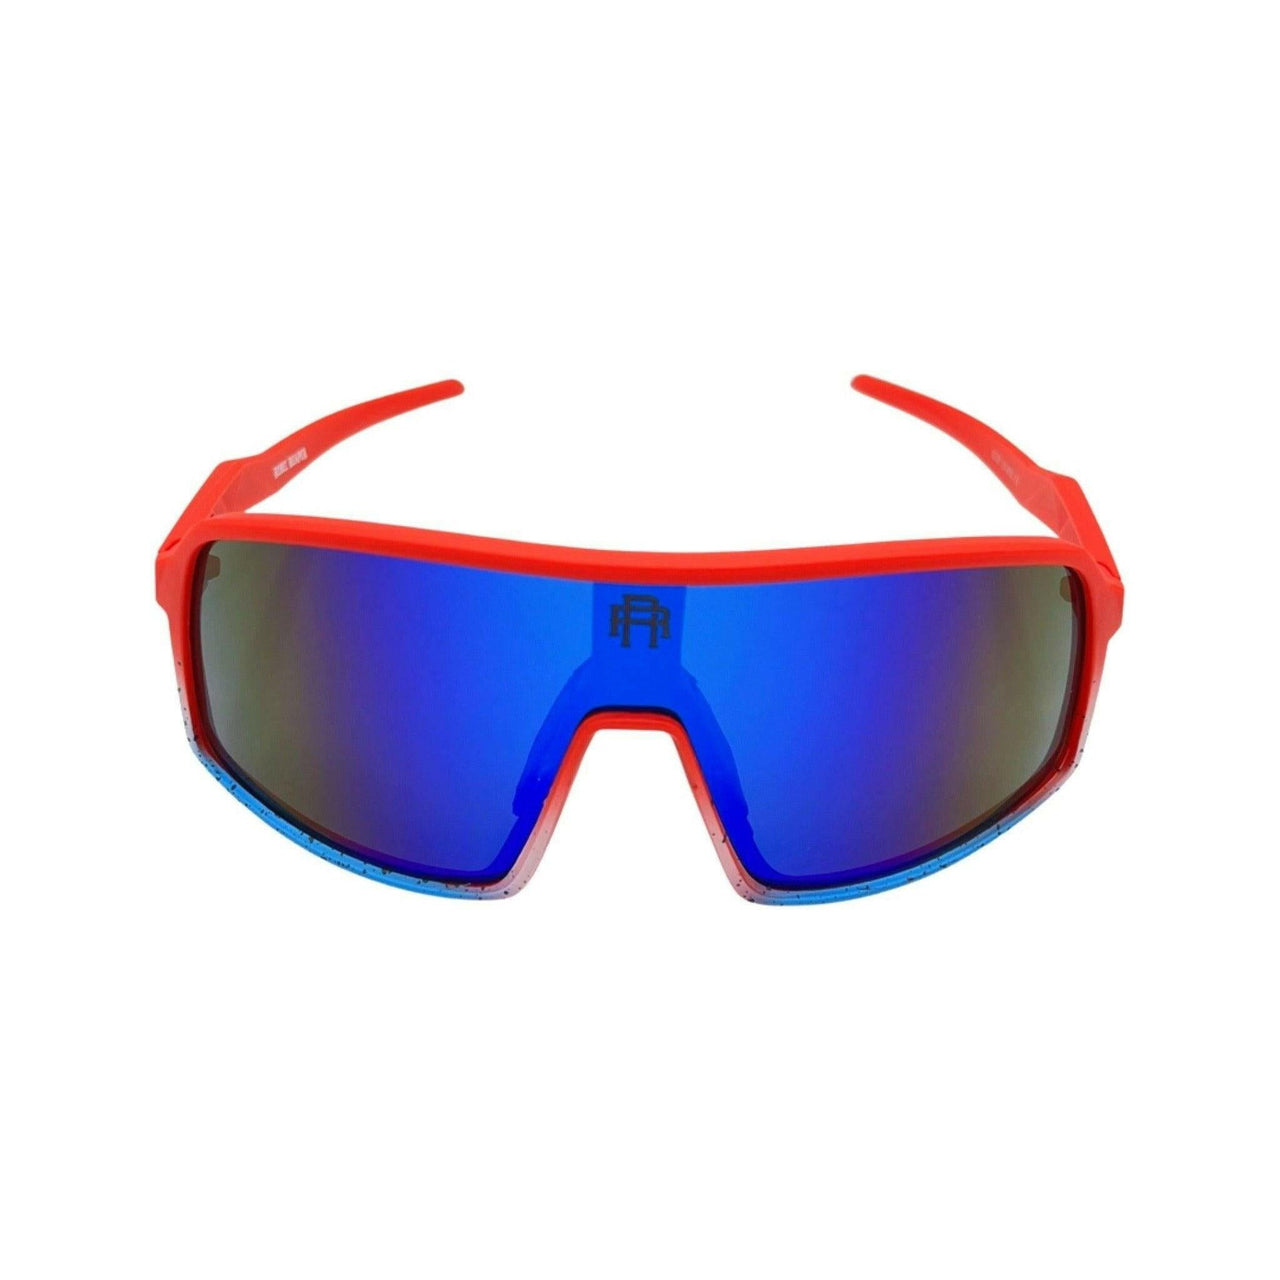 Yeti Red White & Blue Mirror Polarized Lens Sunglasses - Rebel Reaper Clothing CompanySunglasses